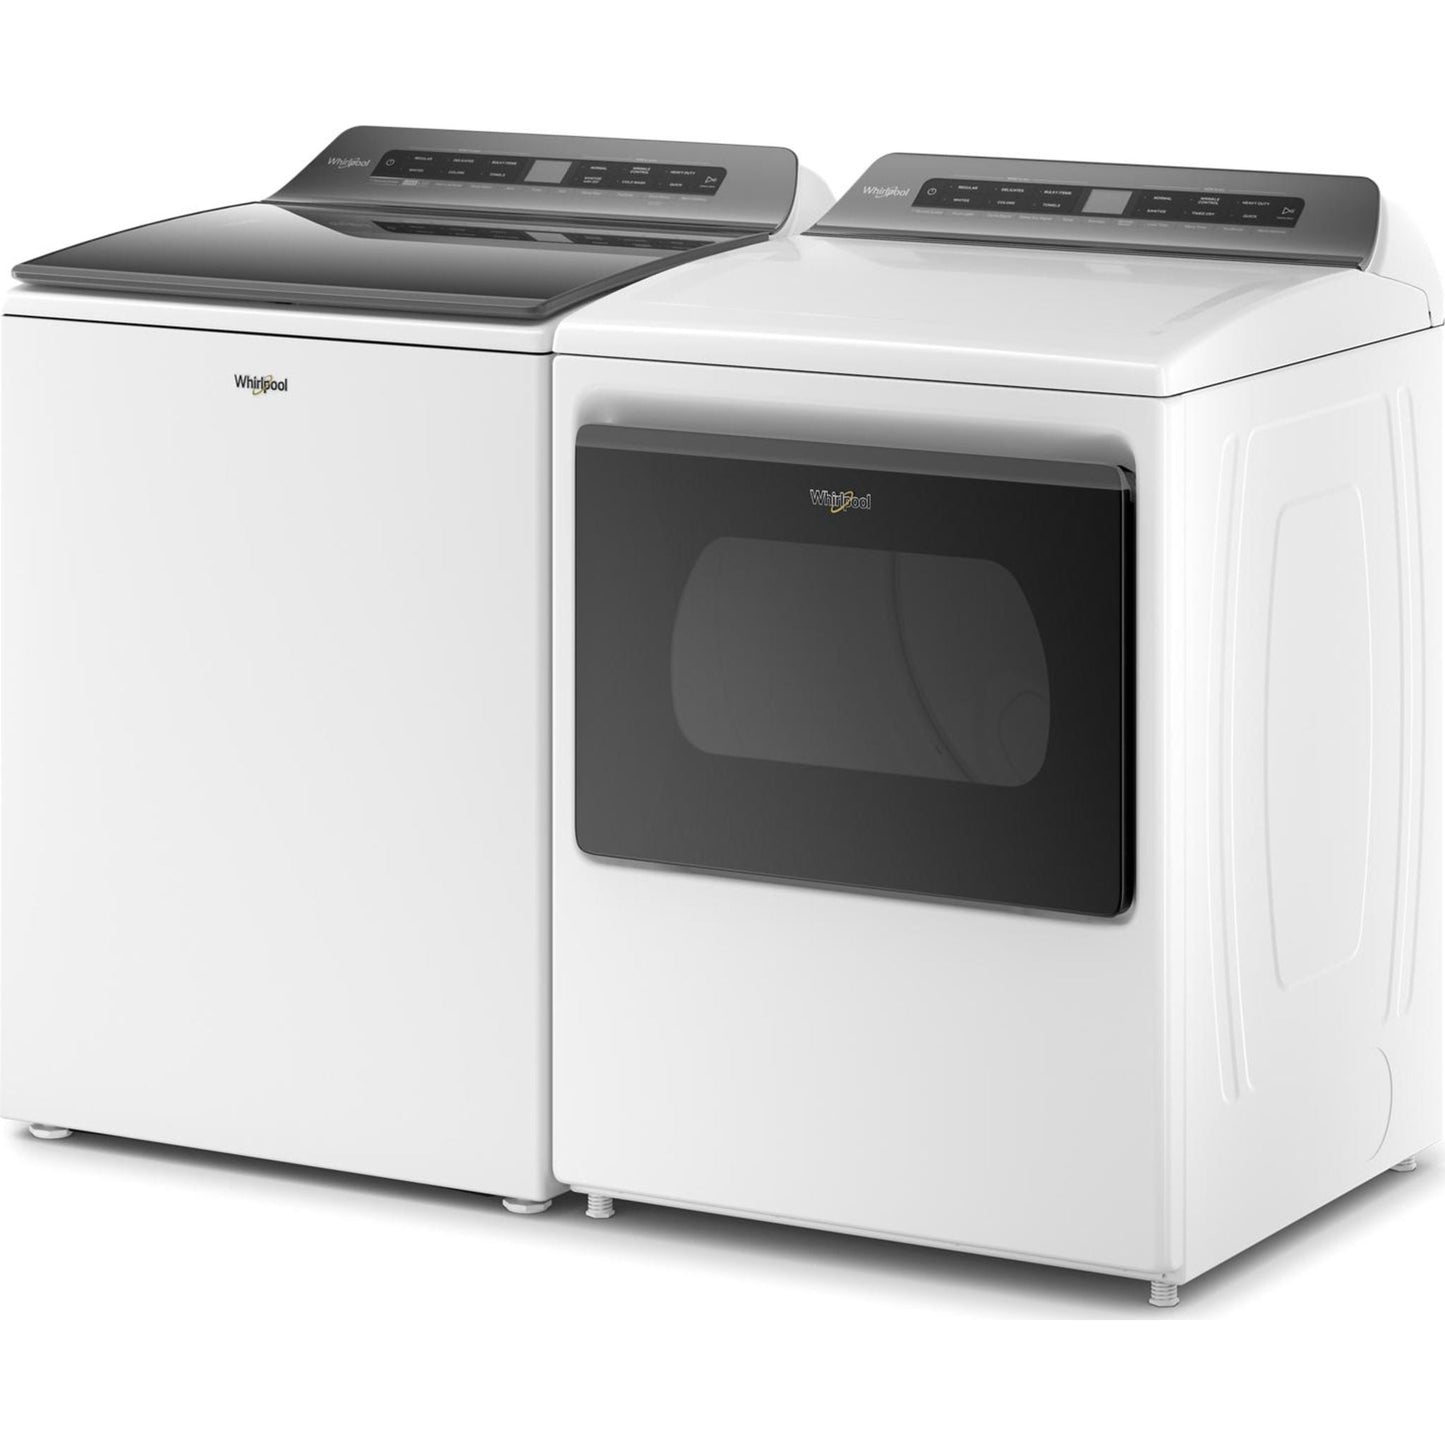 Whirlpool Dryer (YWED6120HW) - White